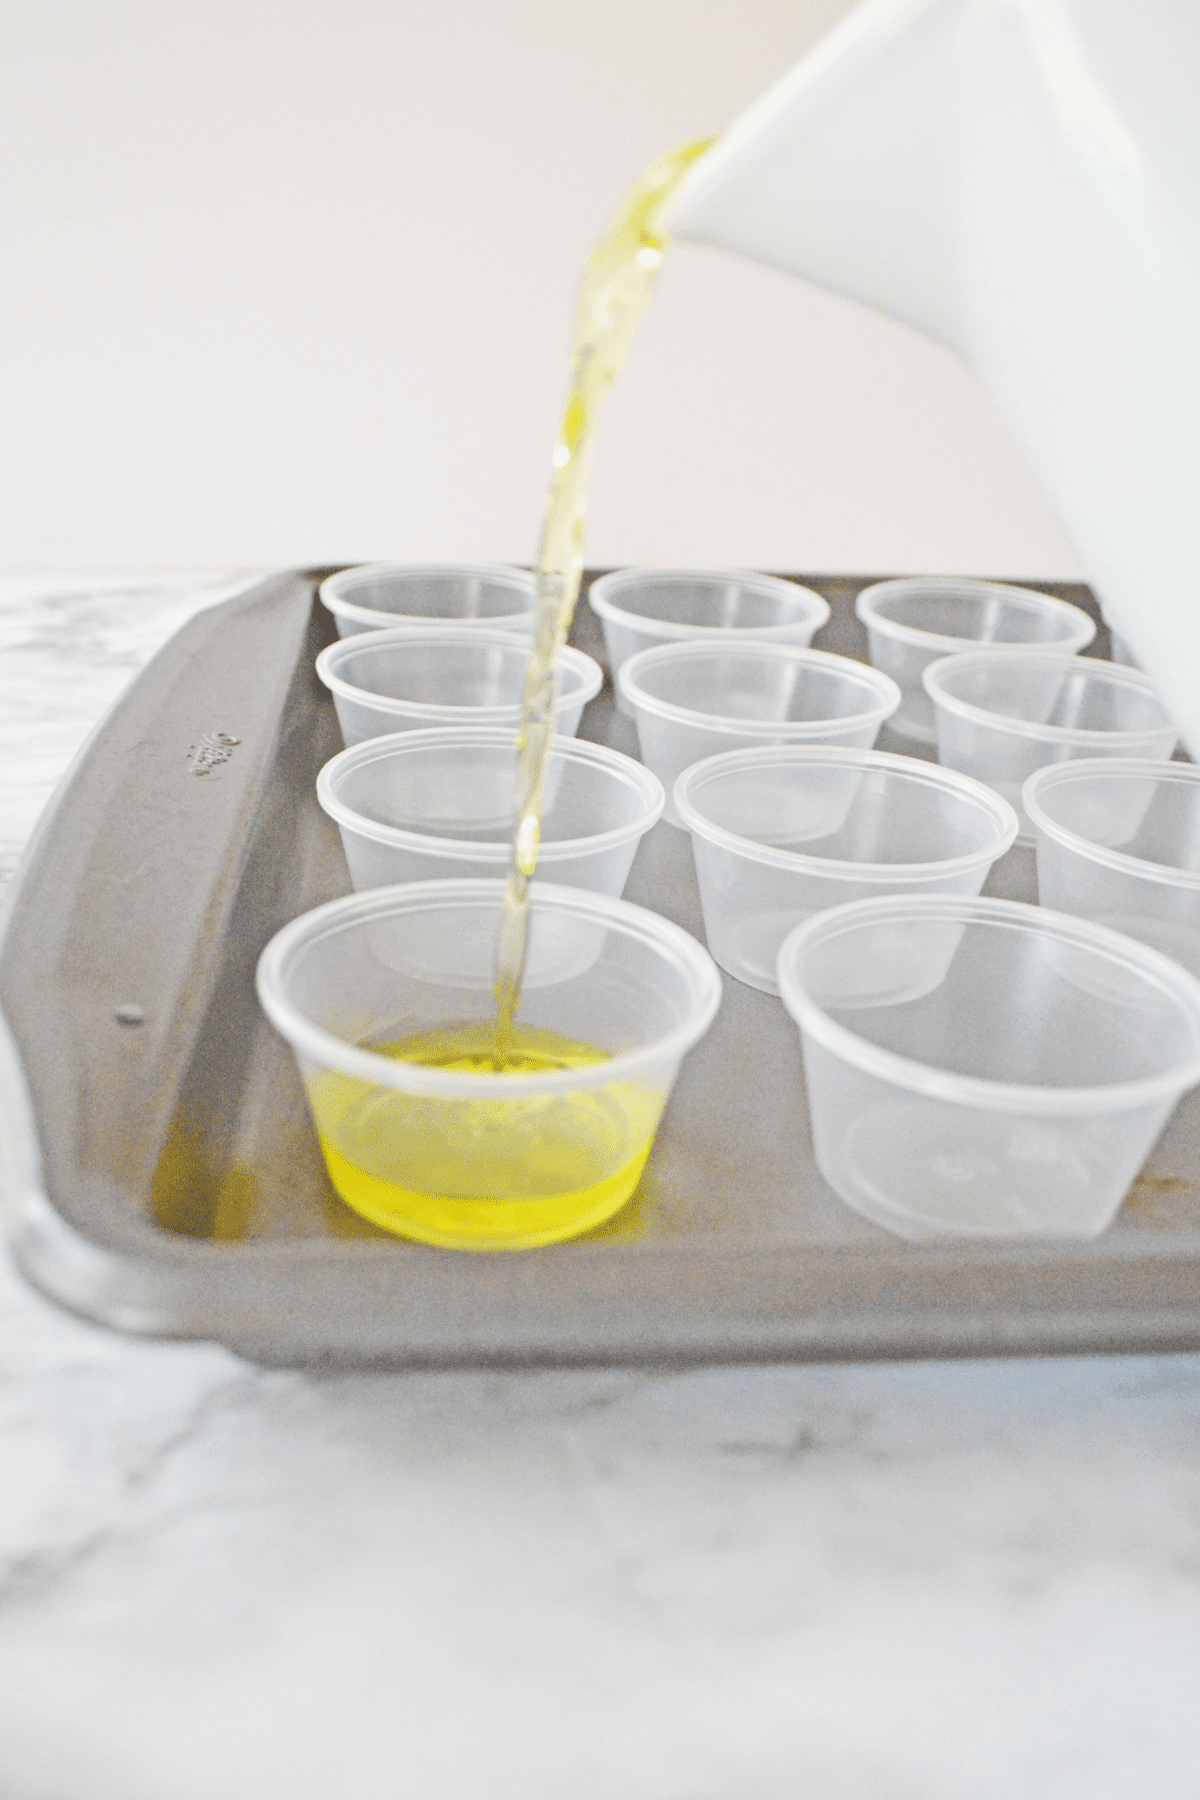 Pouring jello shot mixture into plastic cups